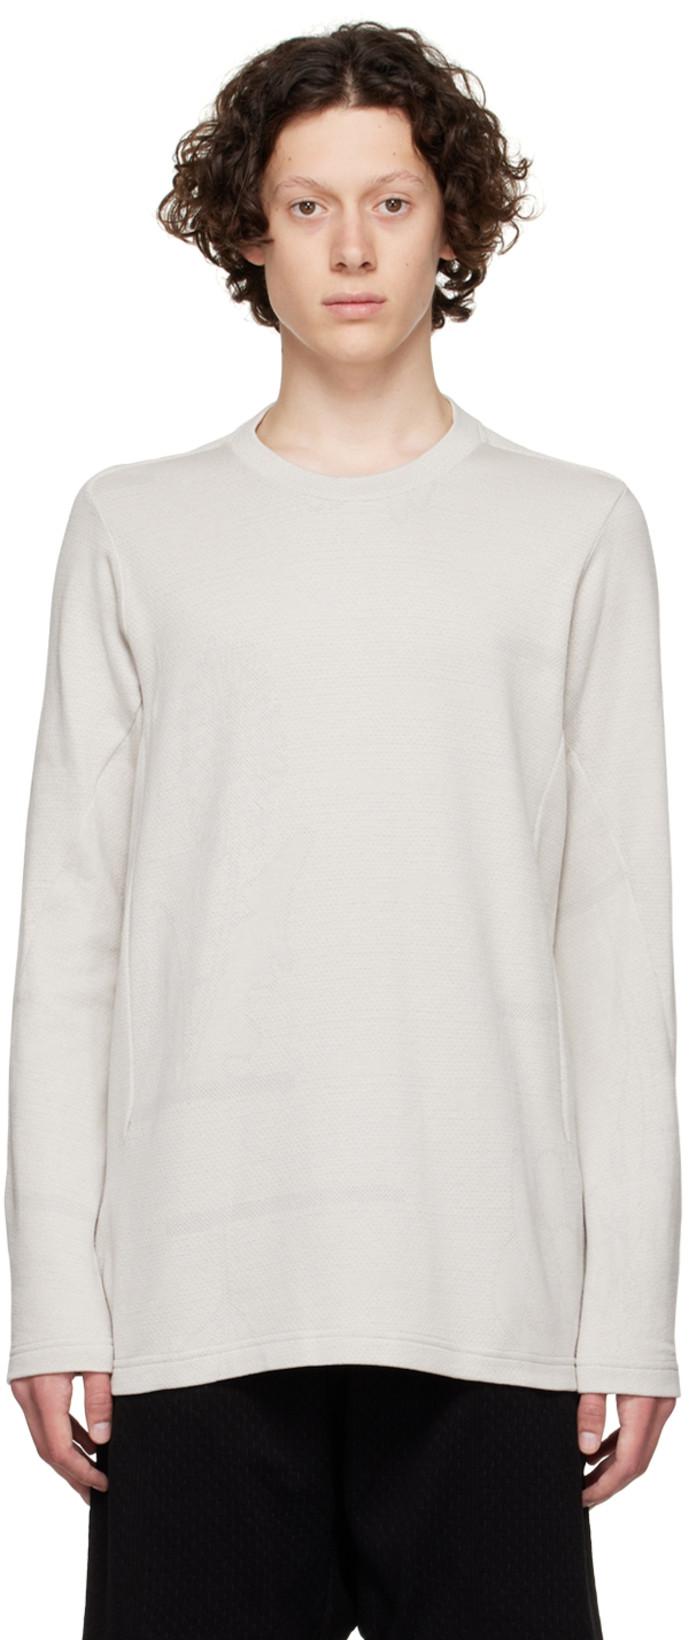 Gray Organic Cotton Long Sleeve T-Shirt by BYBORRE